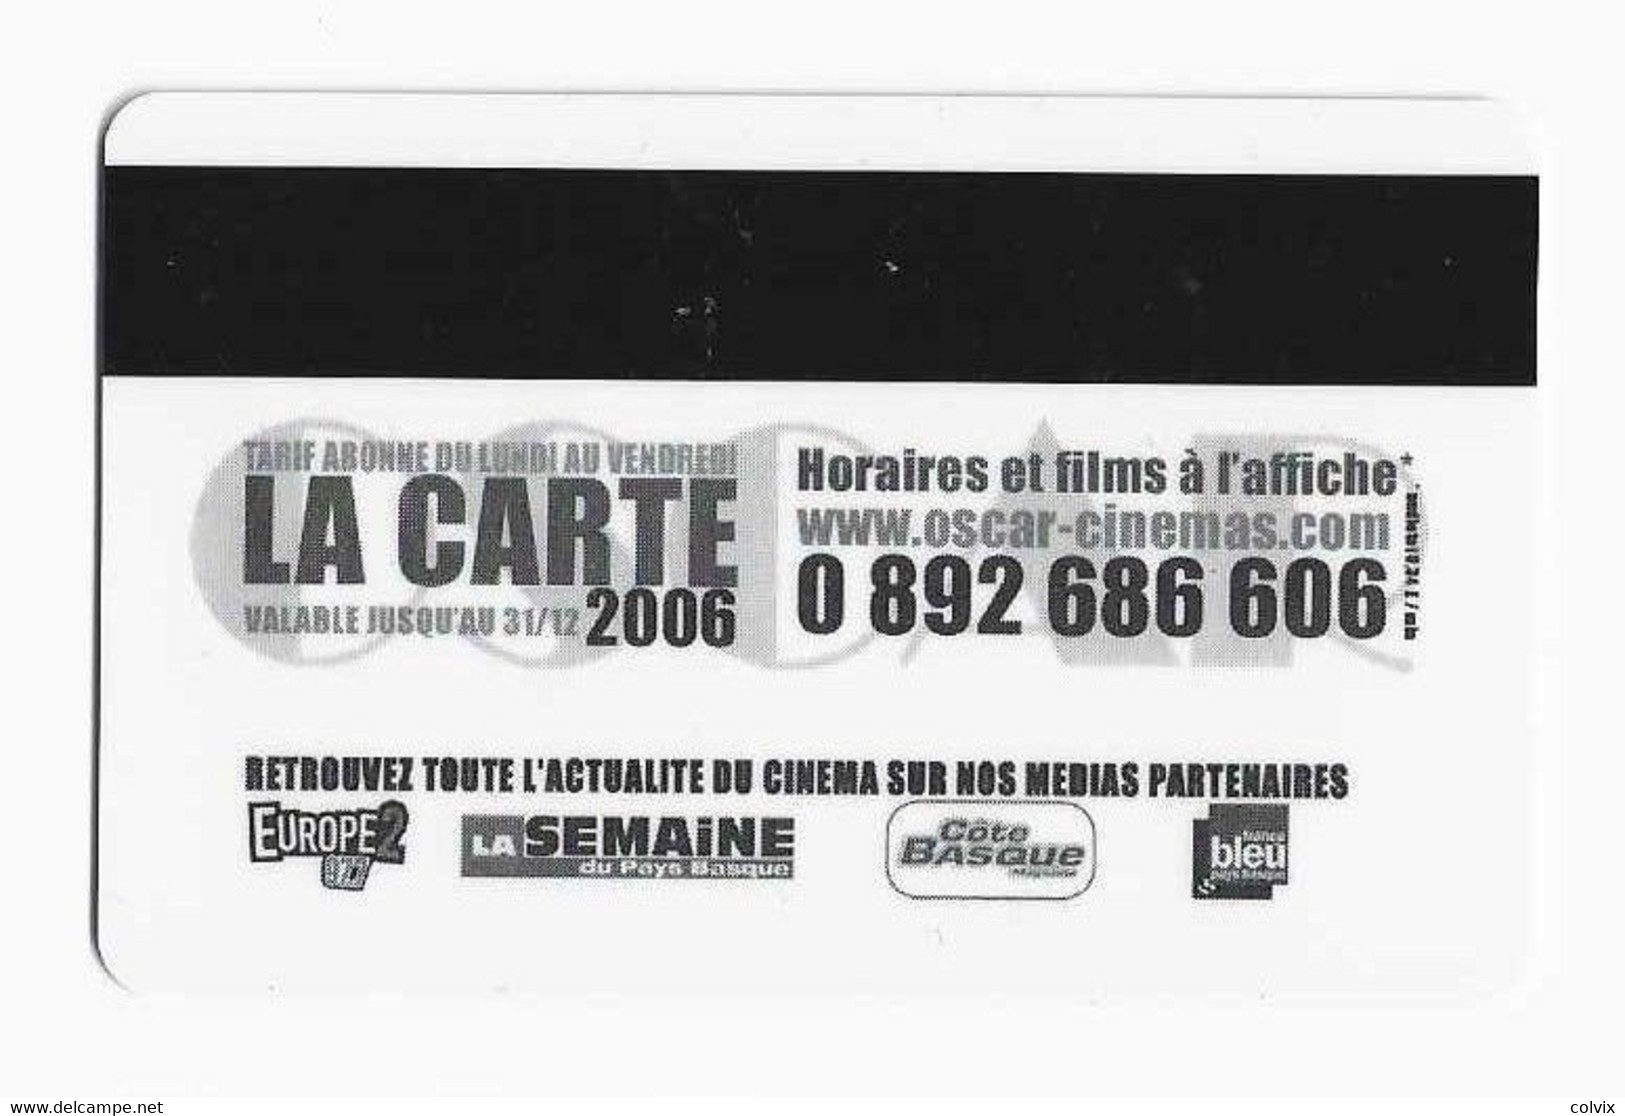 FRANCE CARTE CINEMA OSCAR - Entradas De Cine